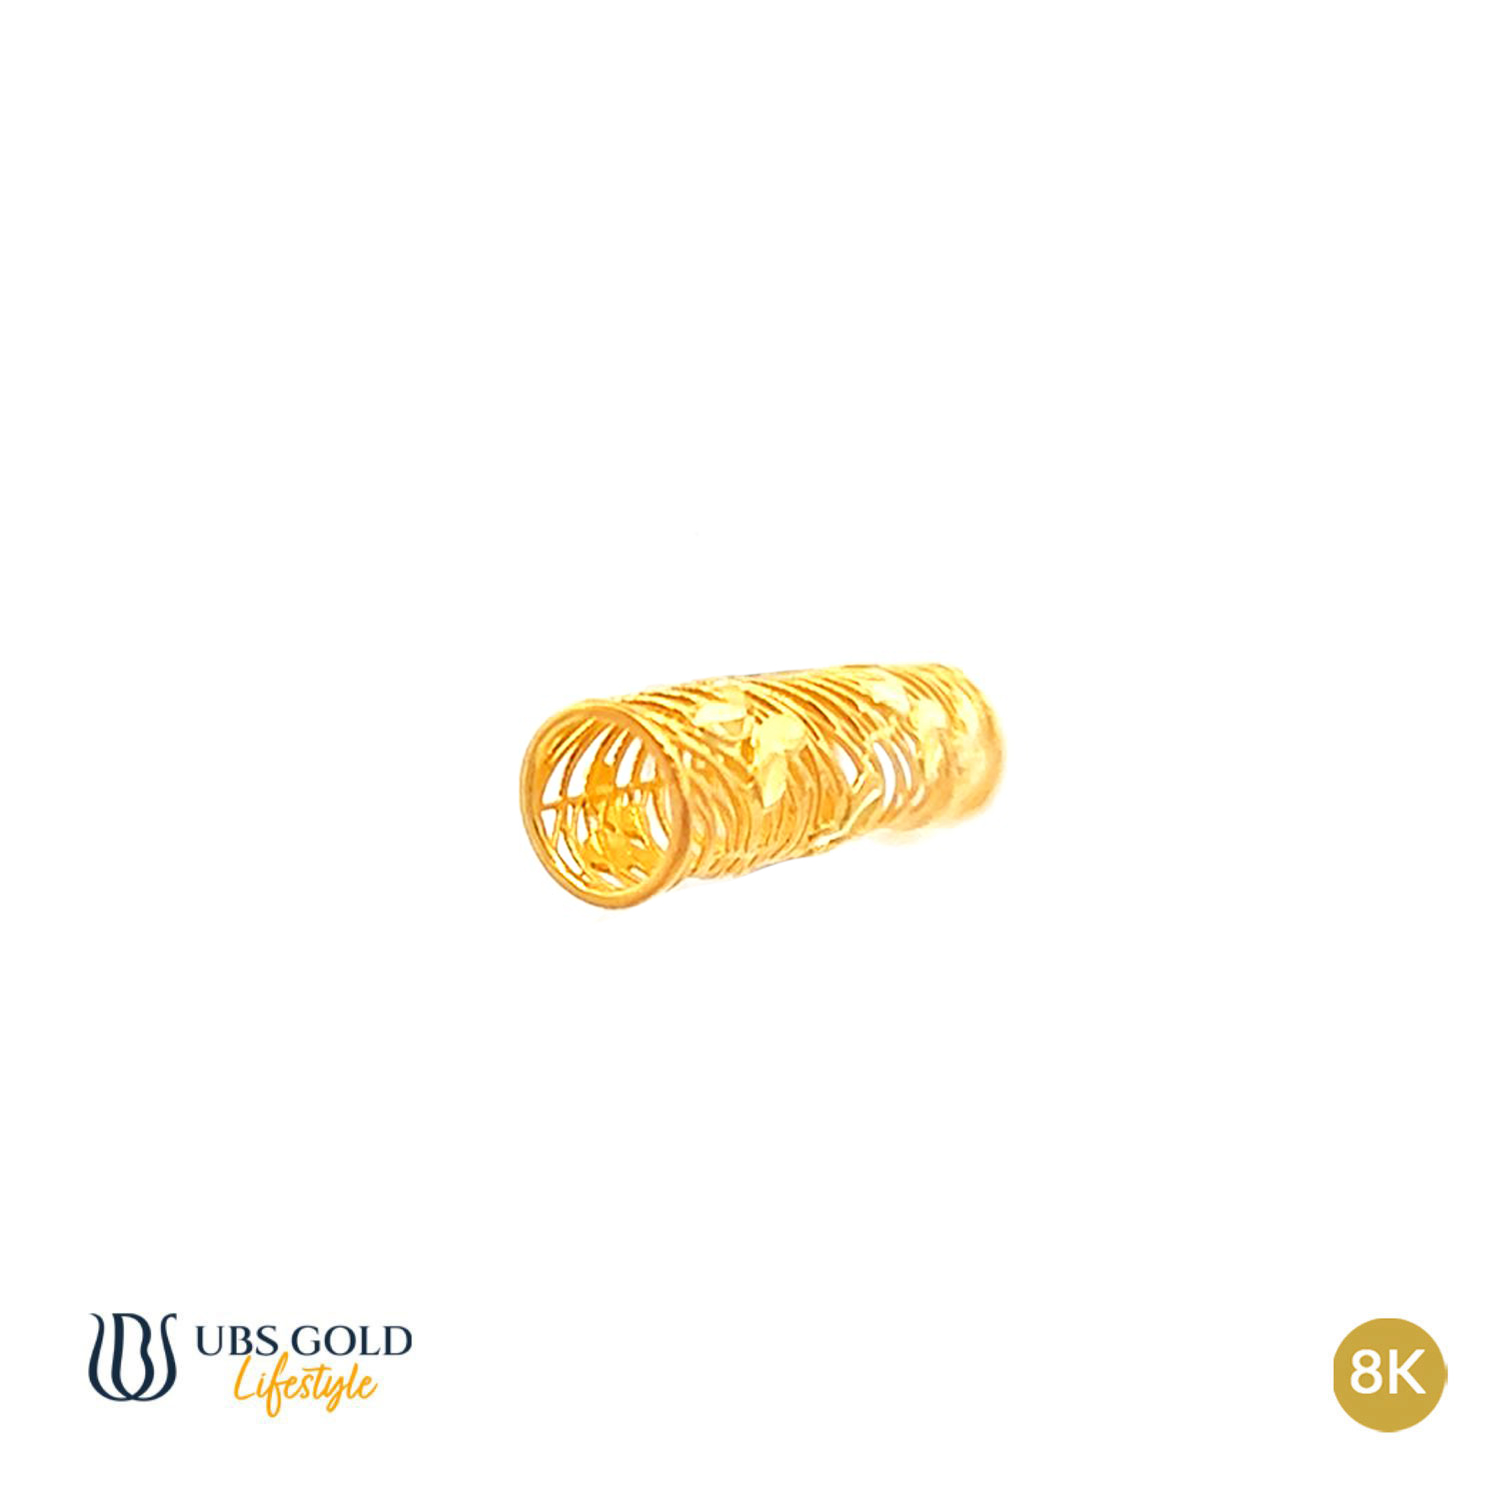 UBS Gold Liontin Emas Sakura - Cdm0054 - 8K